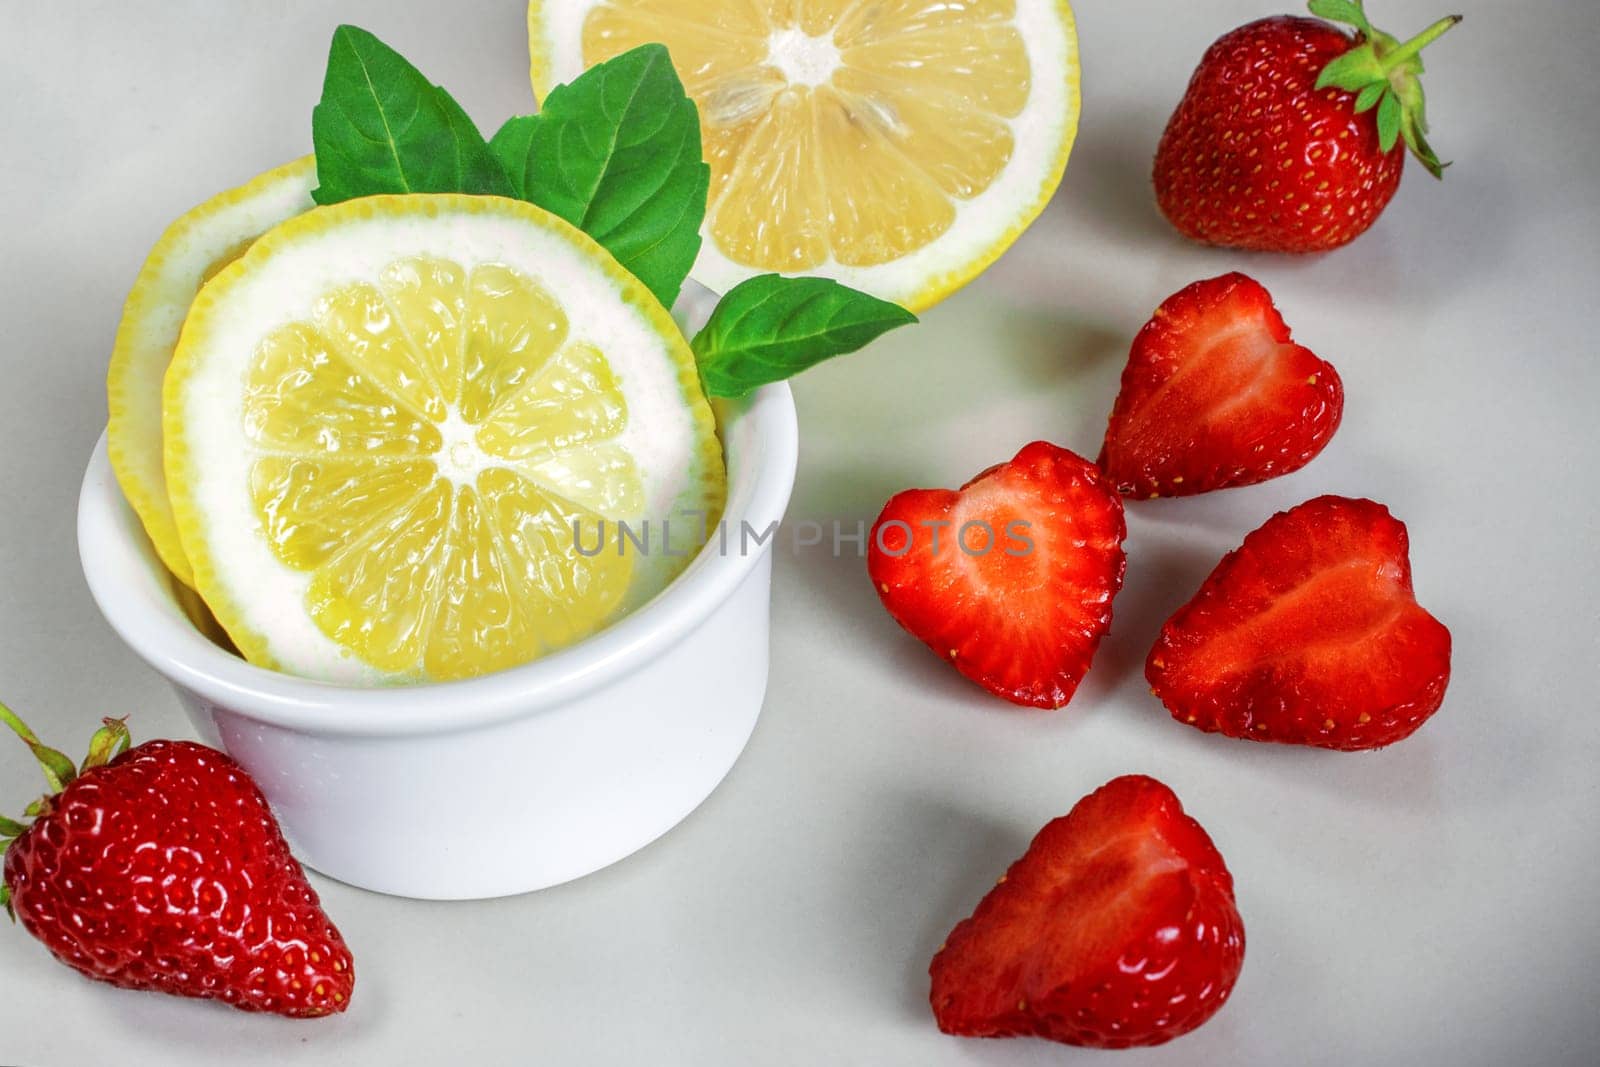 Lemon and strawberries, source of vitamin C.